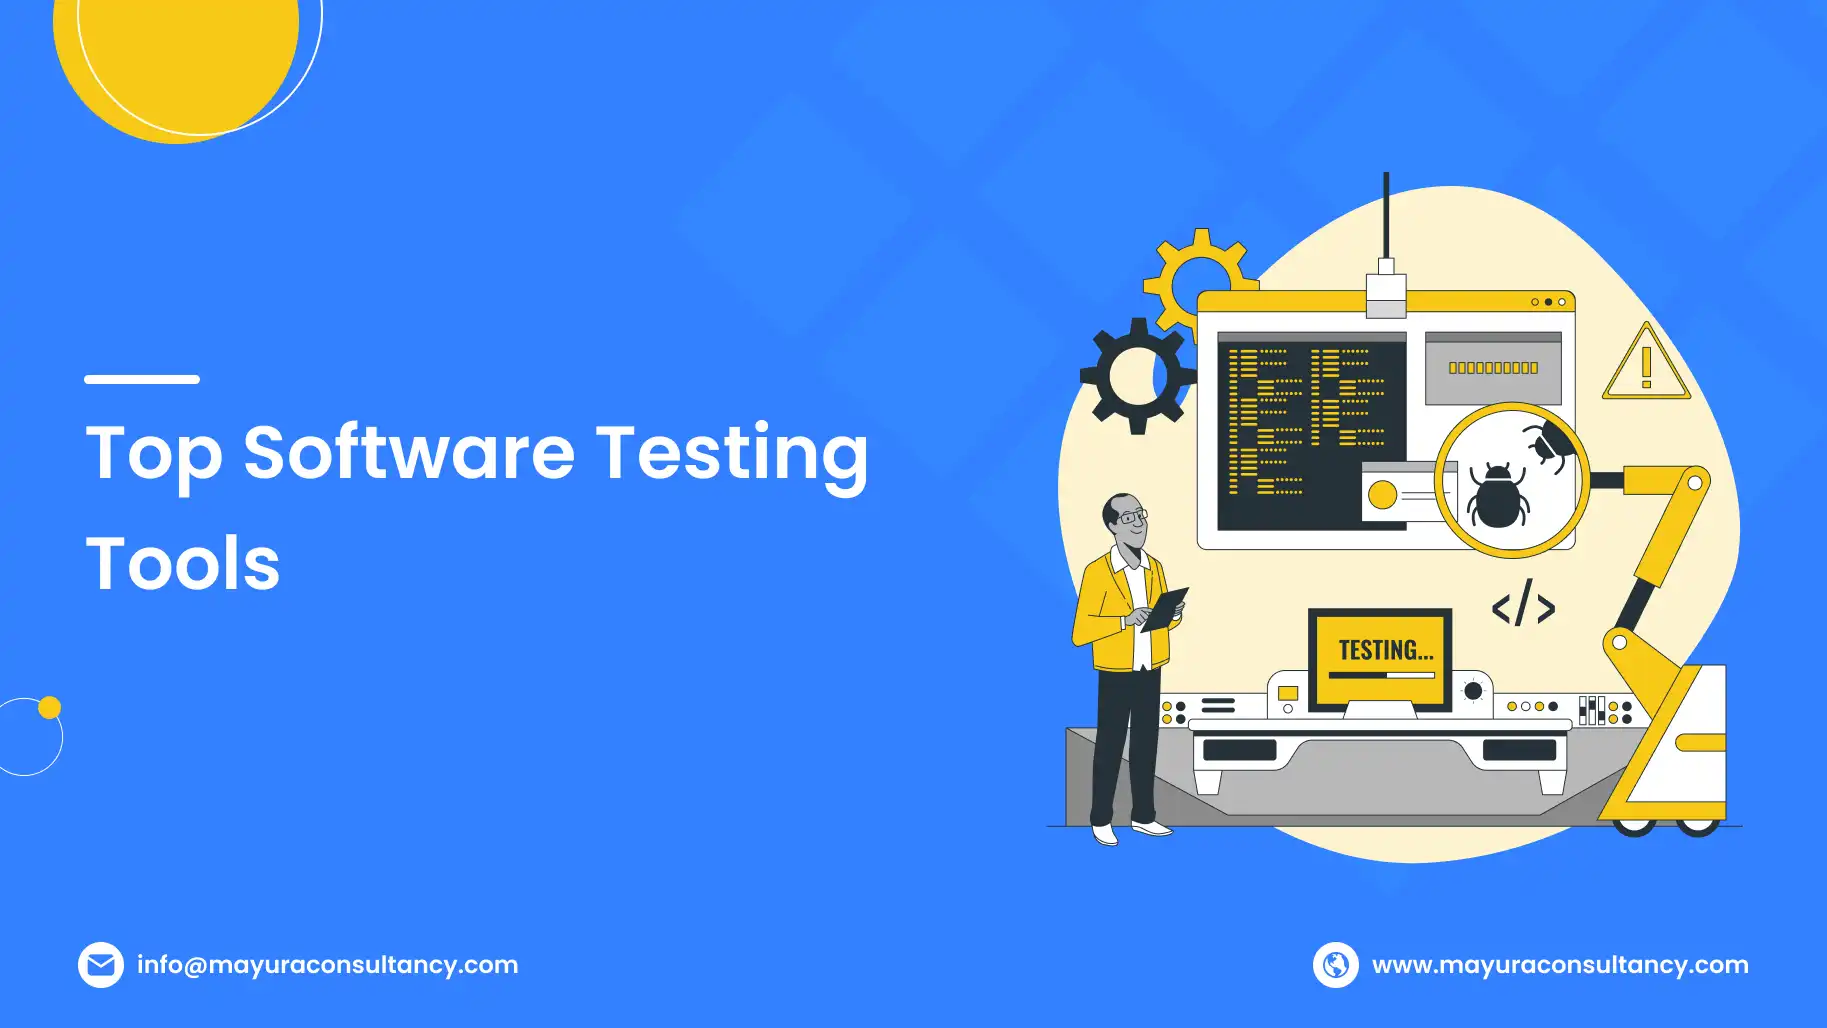 Top Software Testing Tools